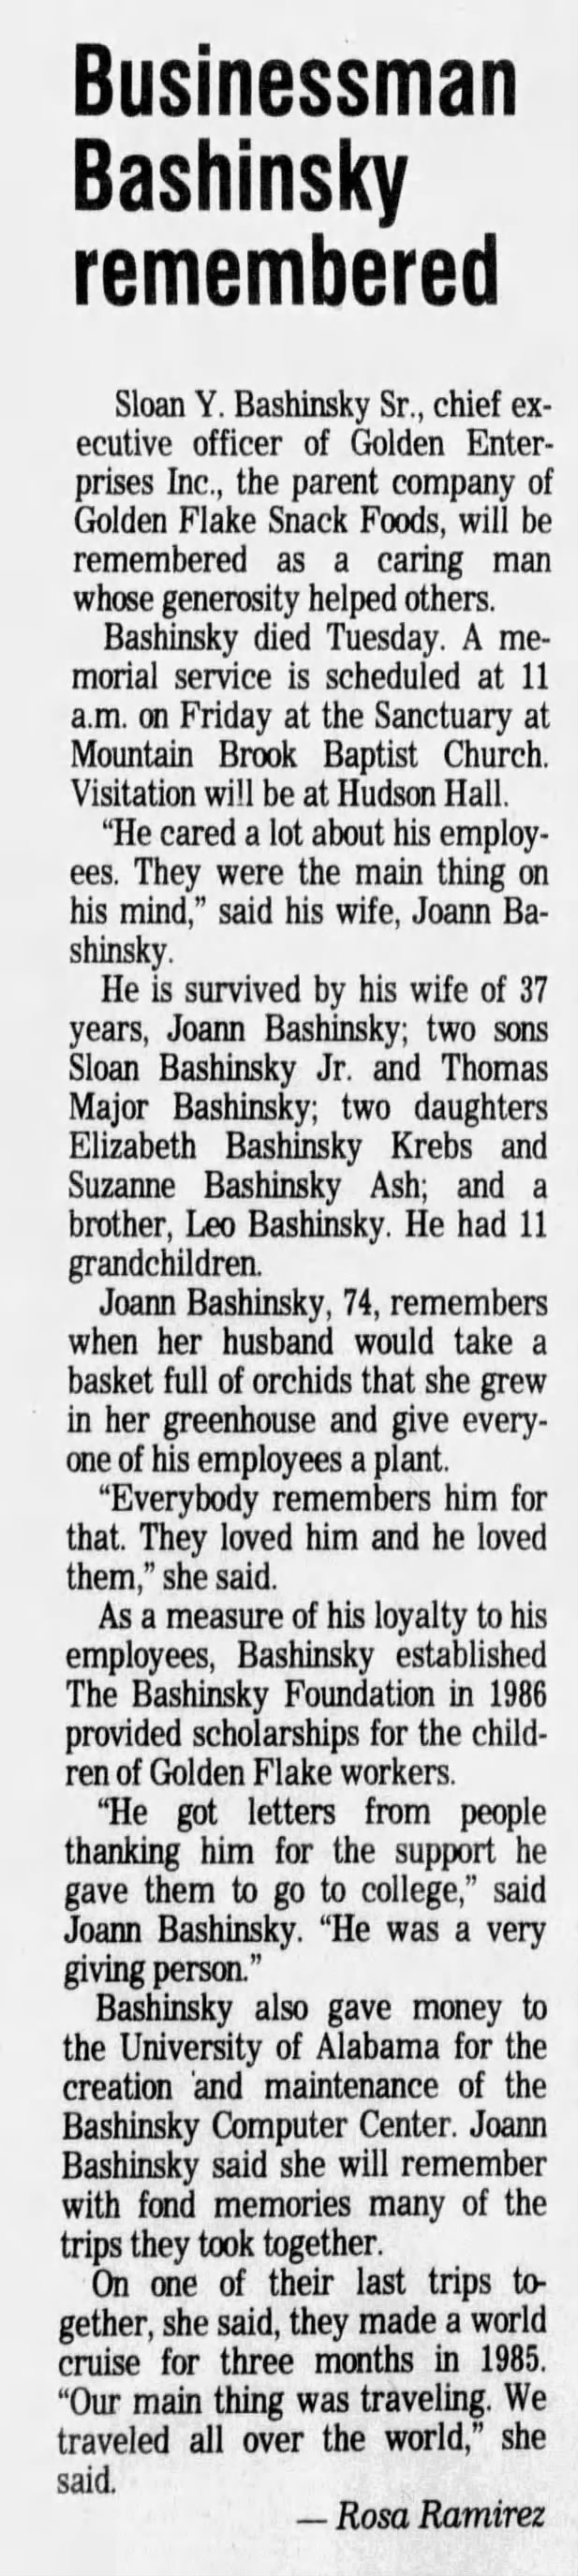 Obituary for Sloan Y Bashinsky Sr